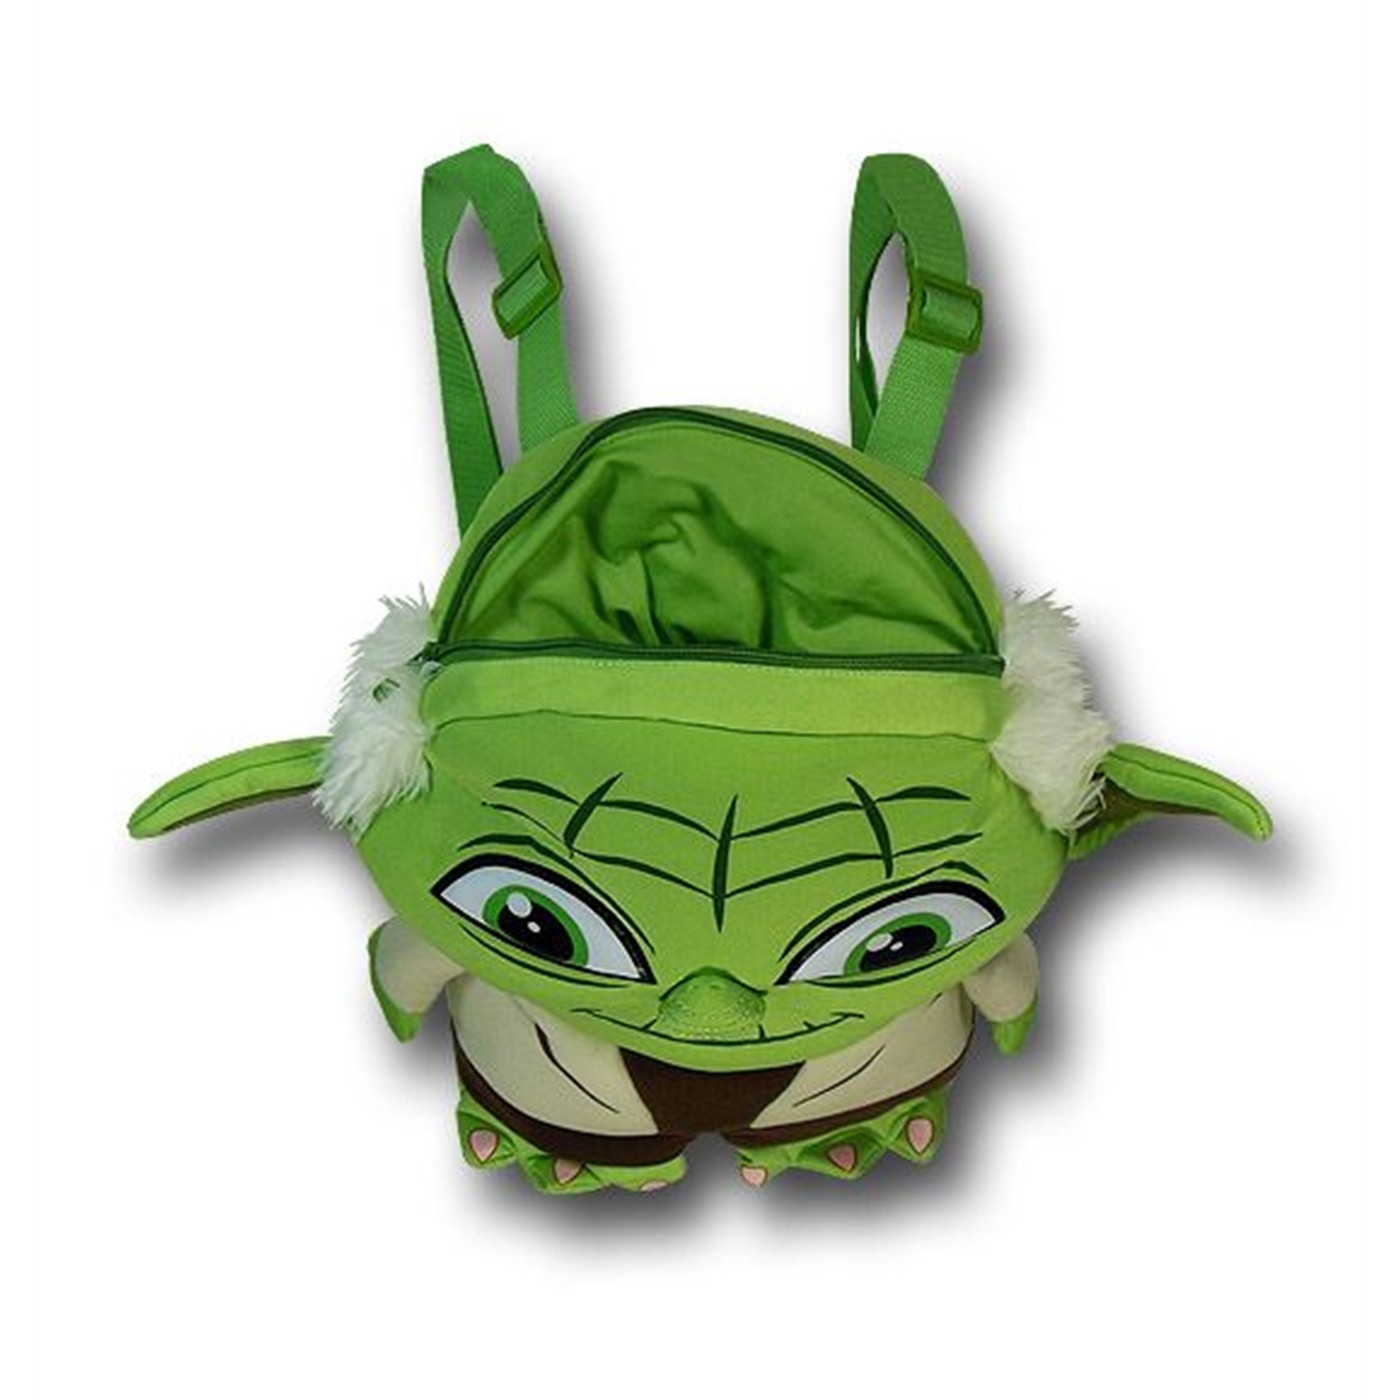 Star Wars Yoda Backpack Pal